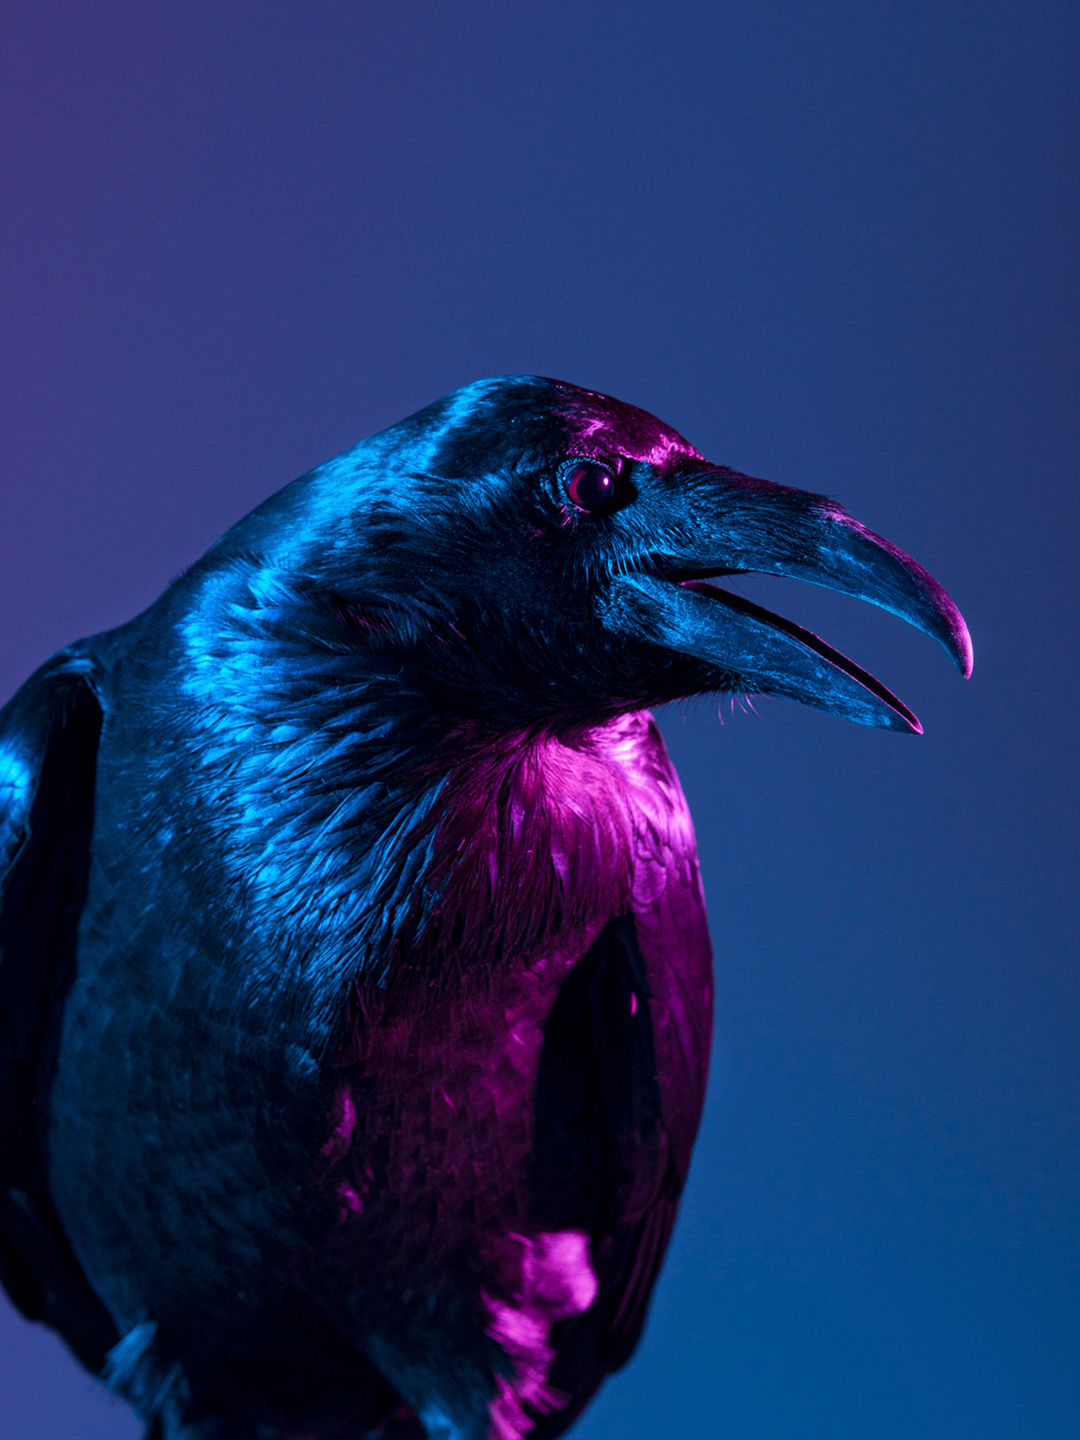 Loki The Raven studio photography portrait.